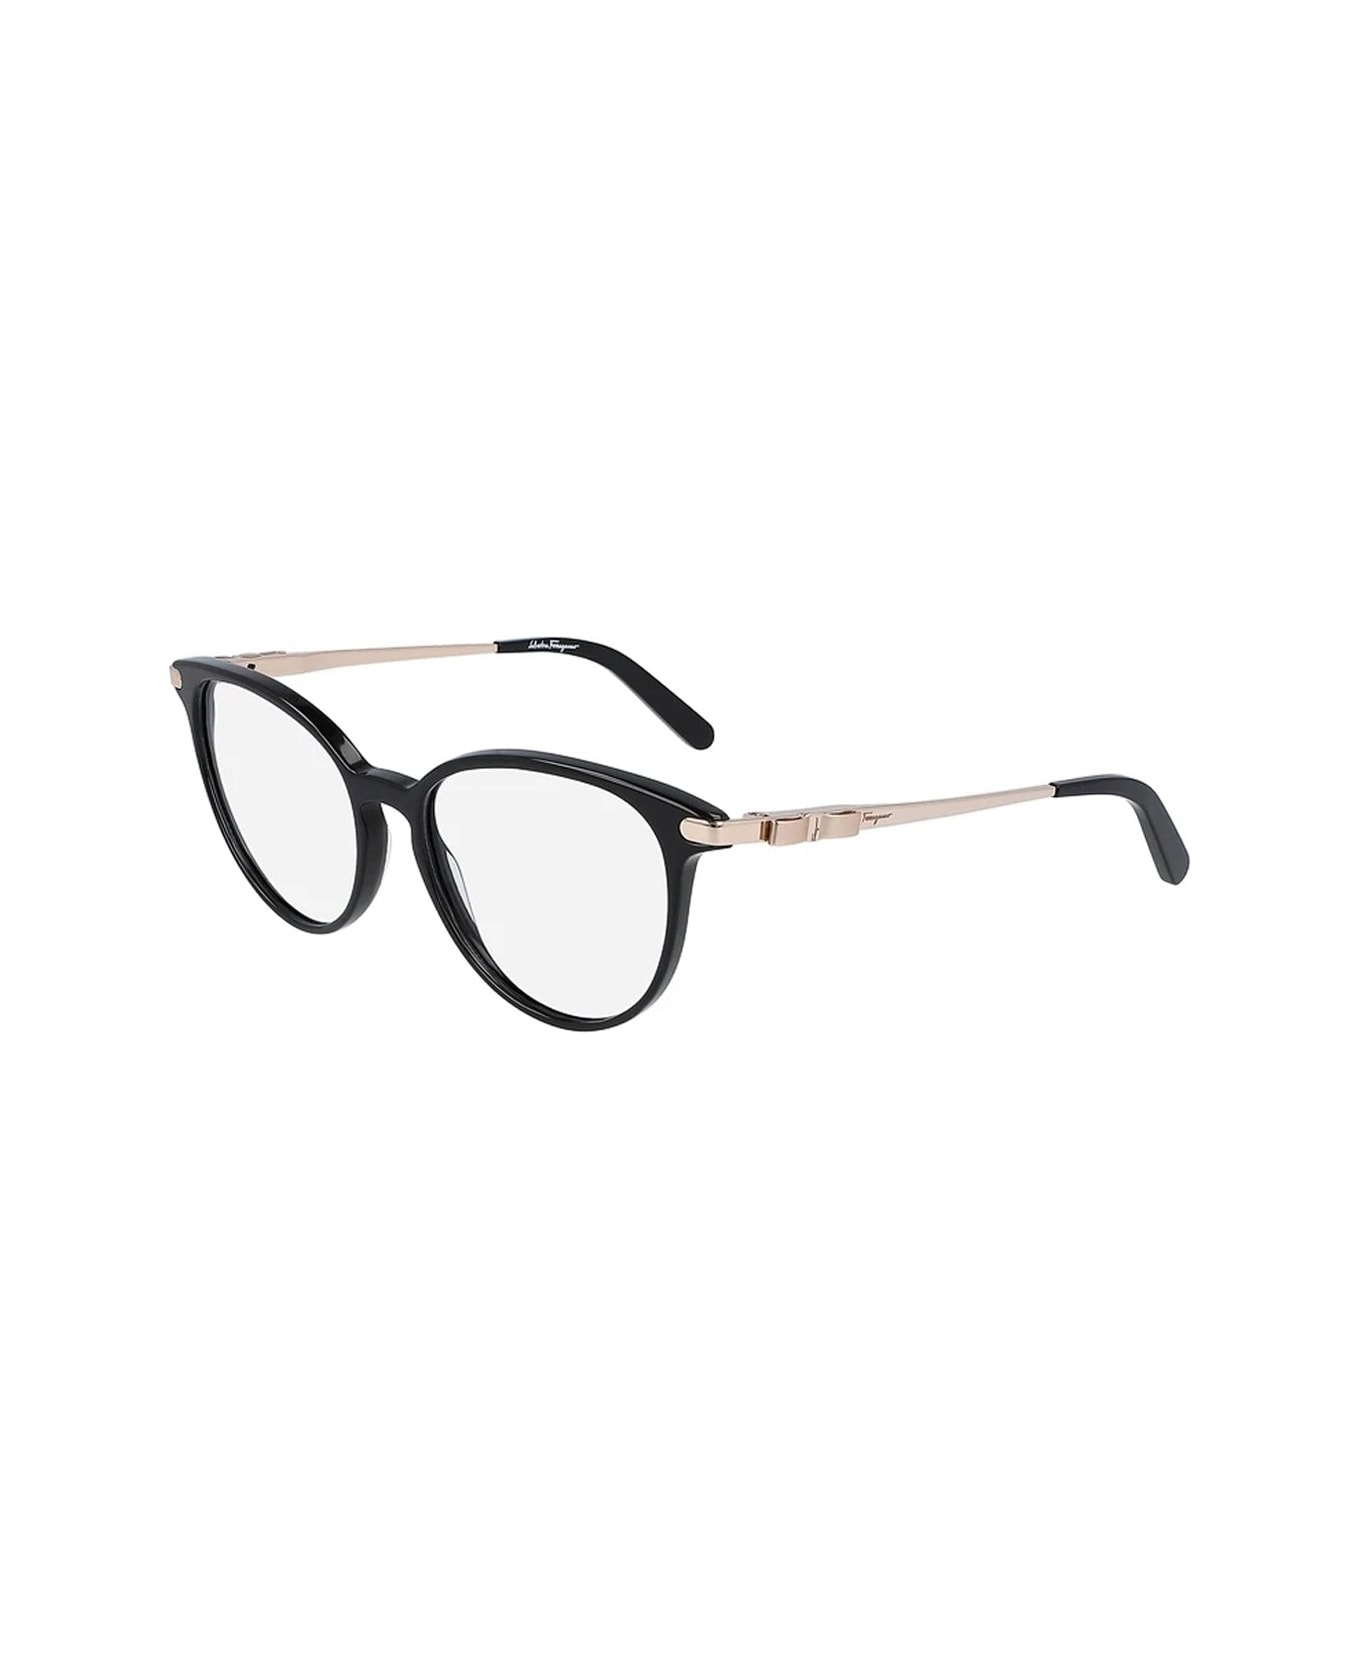 Salvatore Ferragamo Eyewear Sf2862 Glasses - Nero